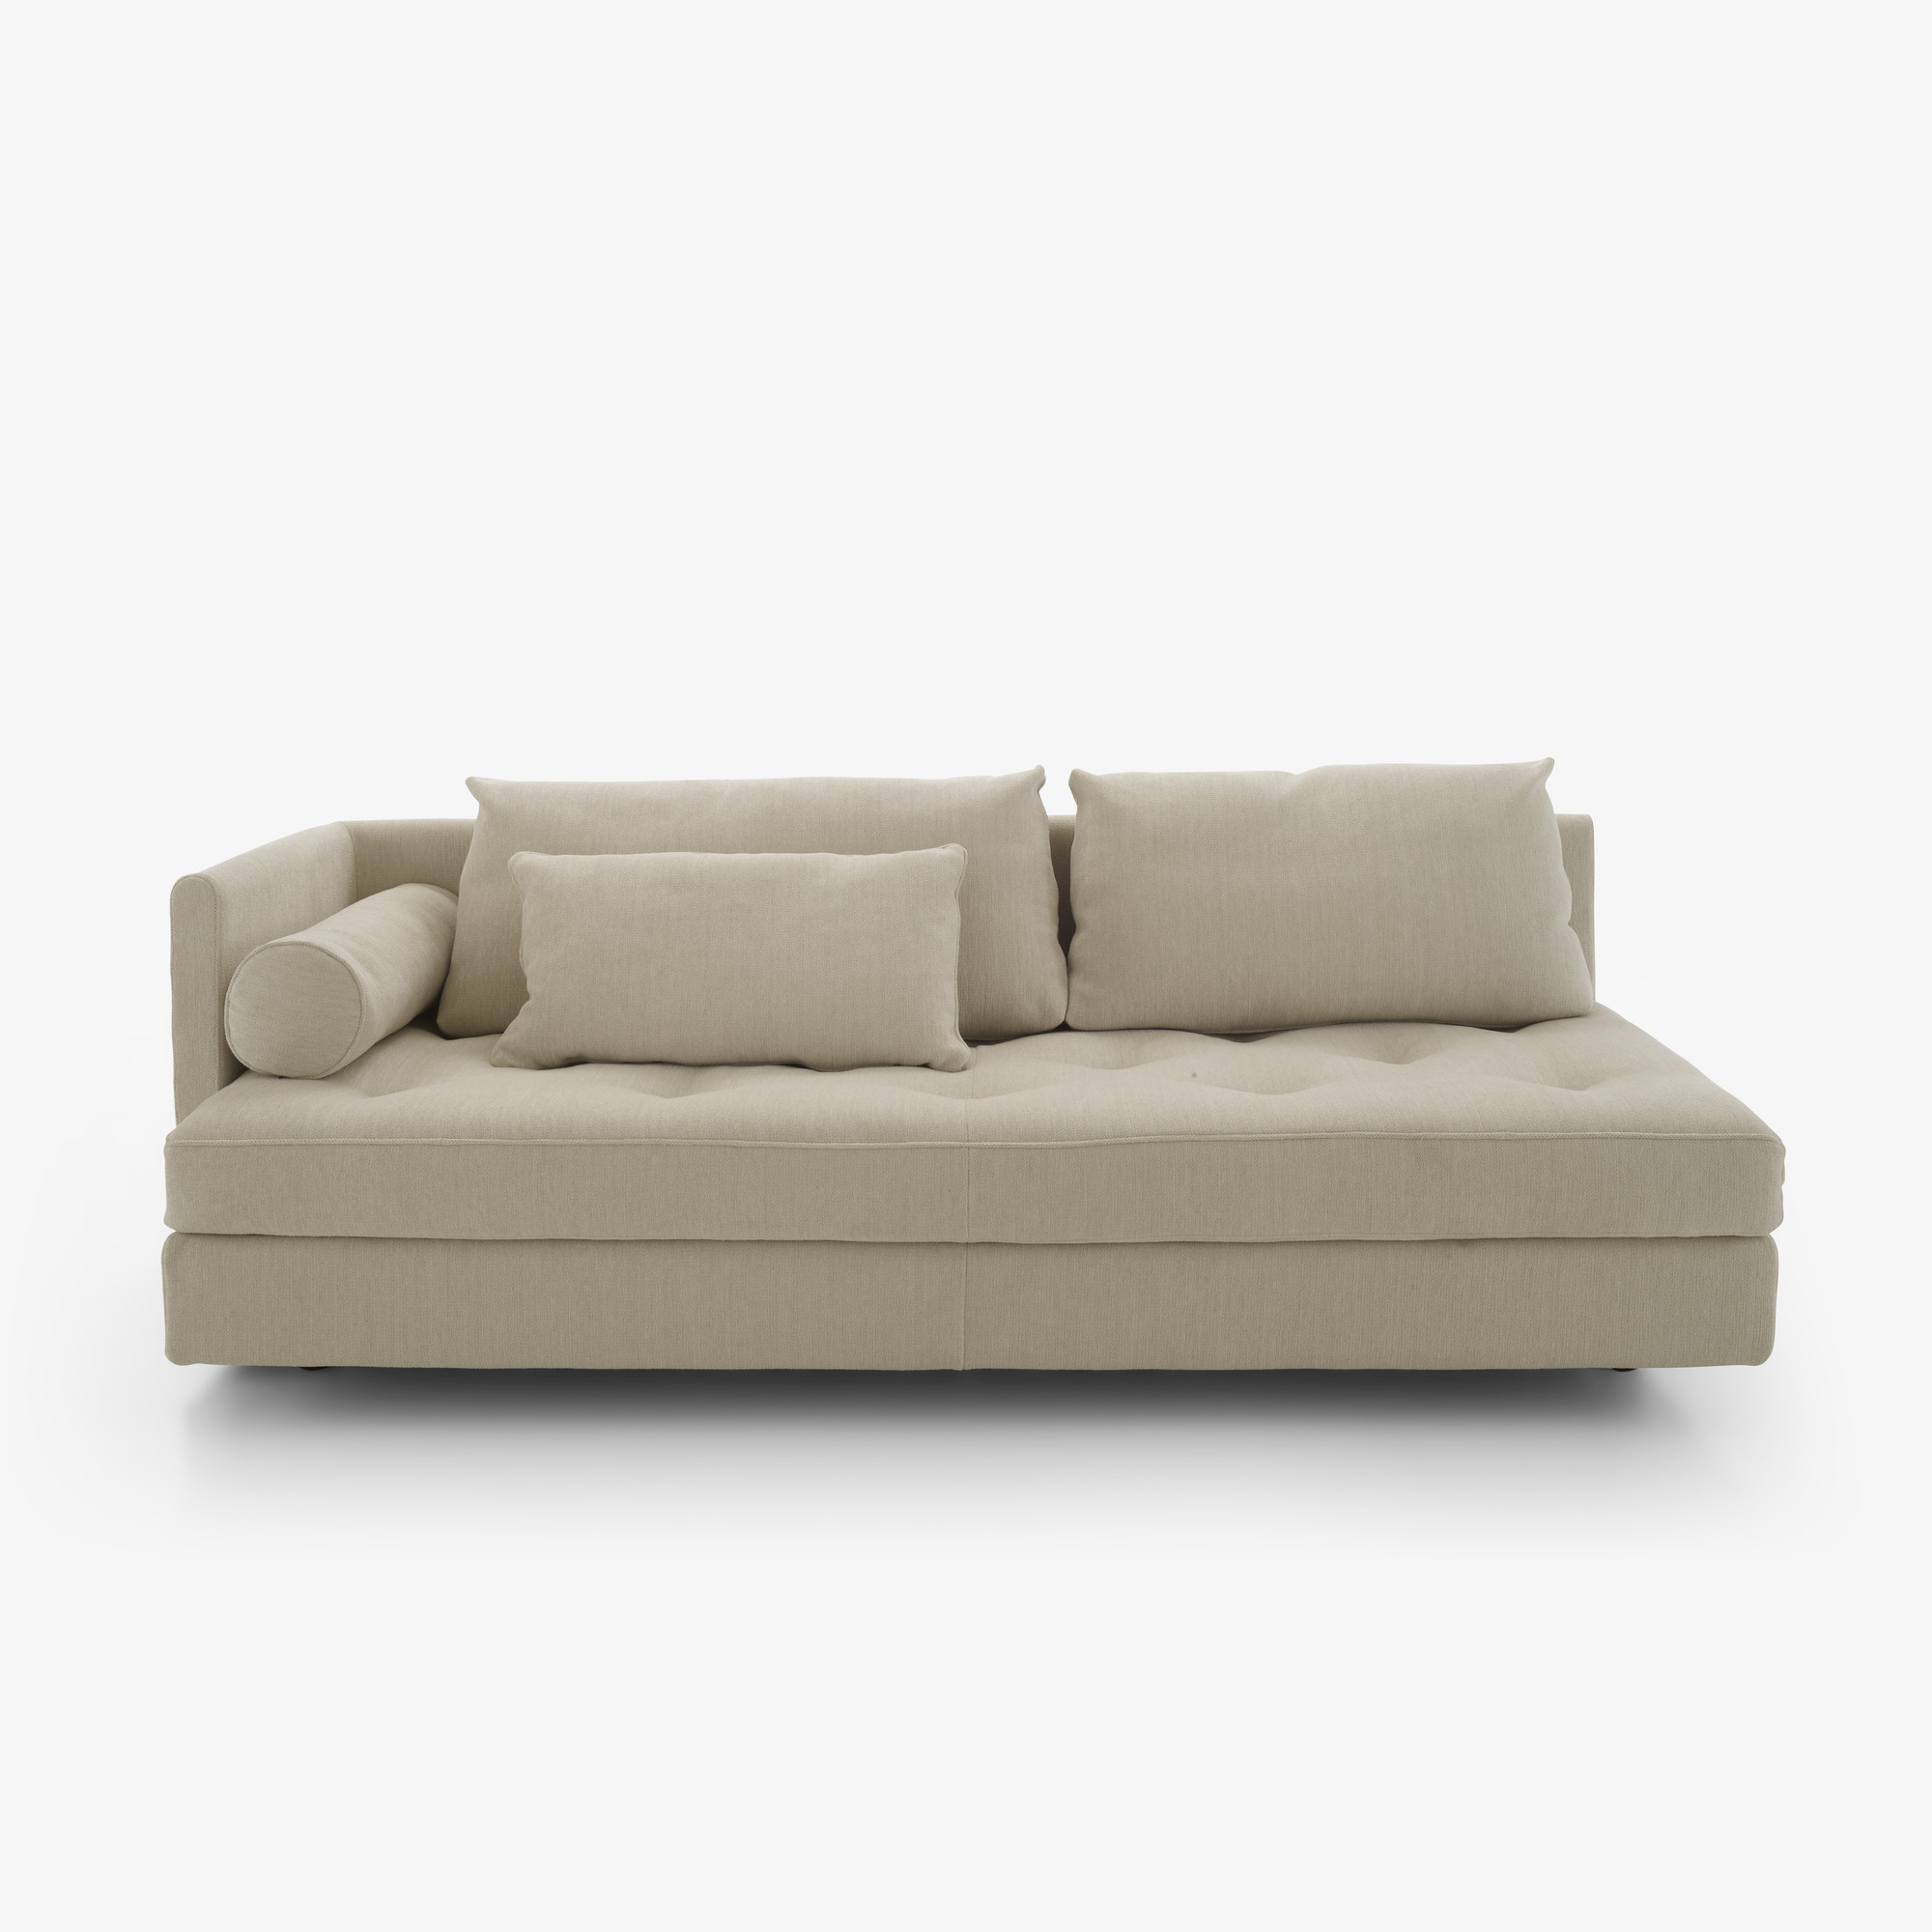 Image 1-arm sofa 1